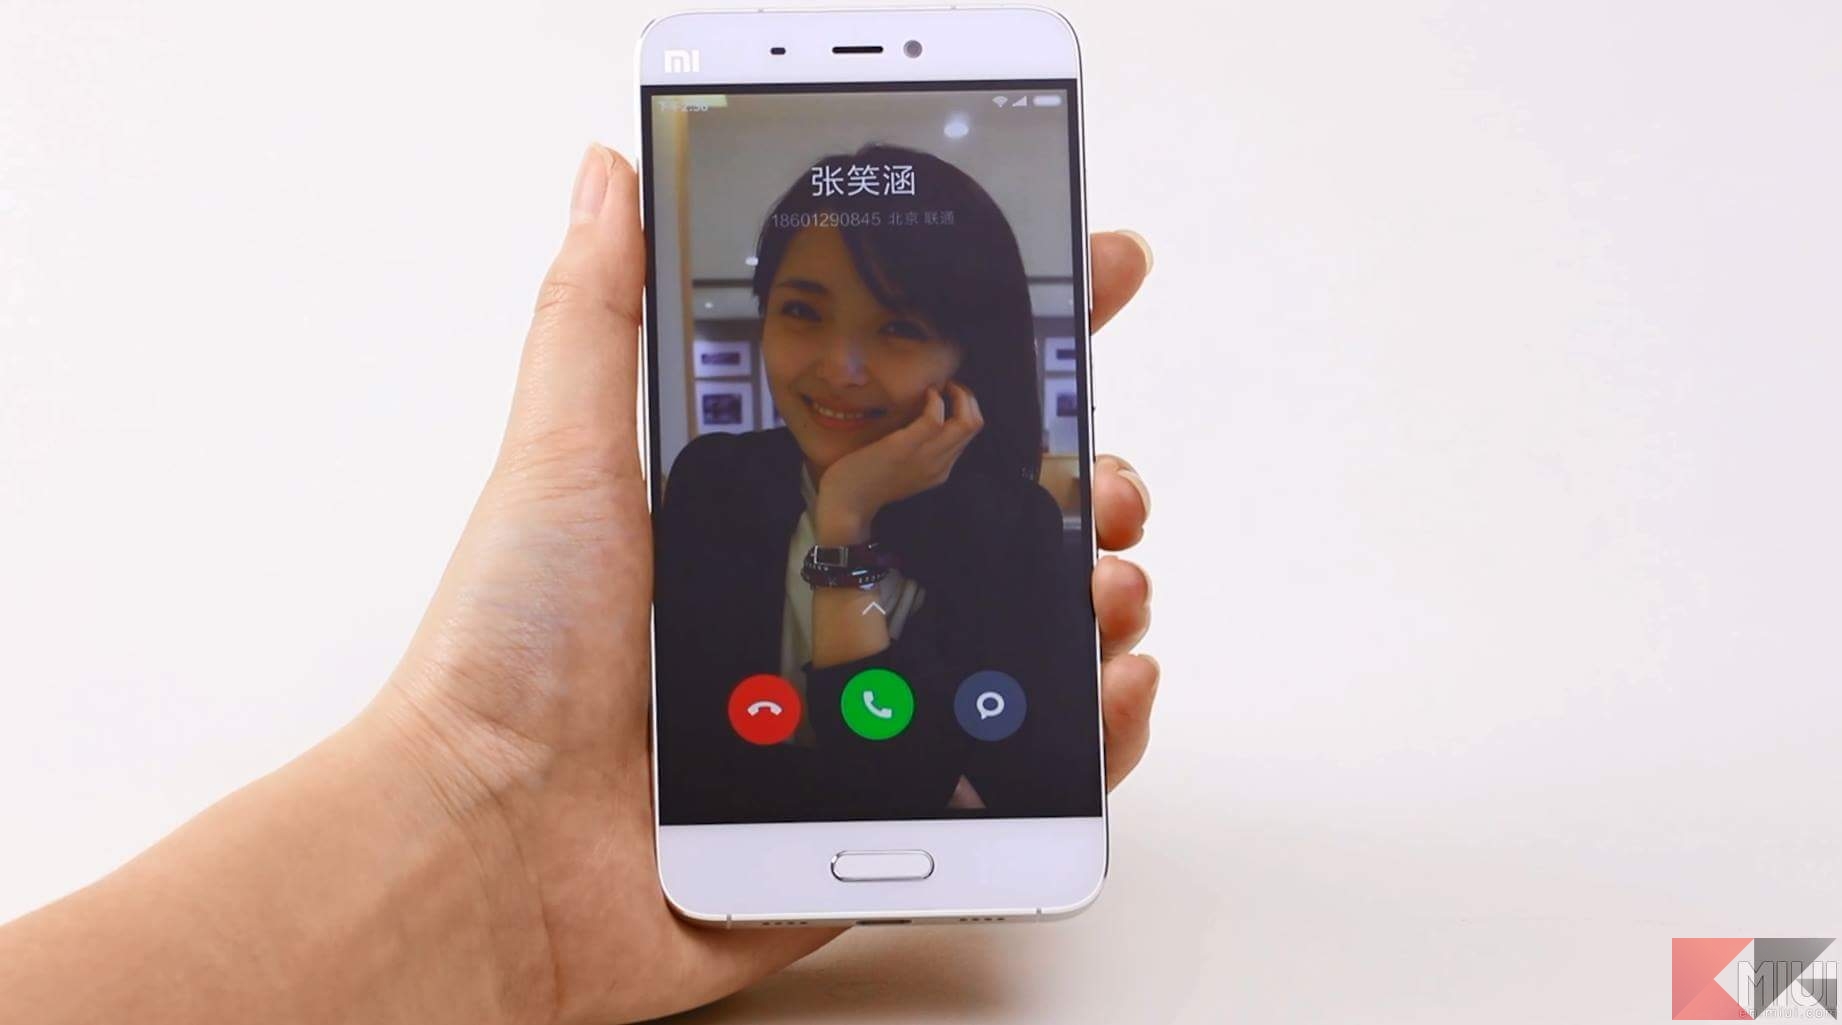 Redmi звонок на весь экран. Xiaomi Redmi miui8. Смартфон с кнопкой под экраном. Фото звонящего на весь экран для андроид. Экран вызова Сяоми.